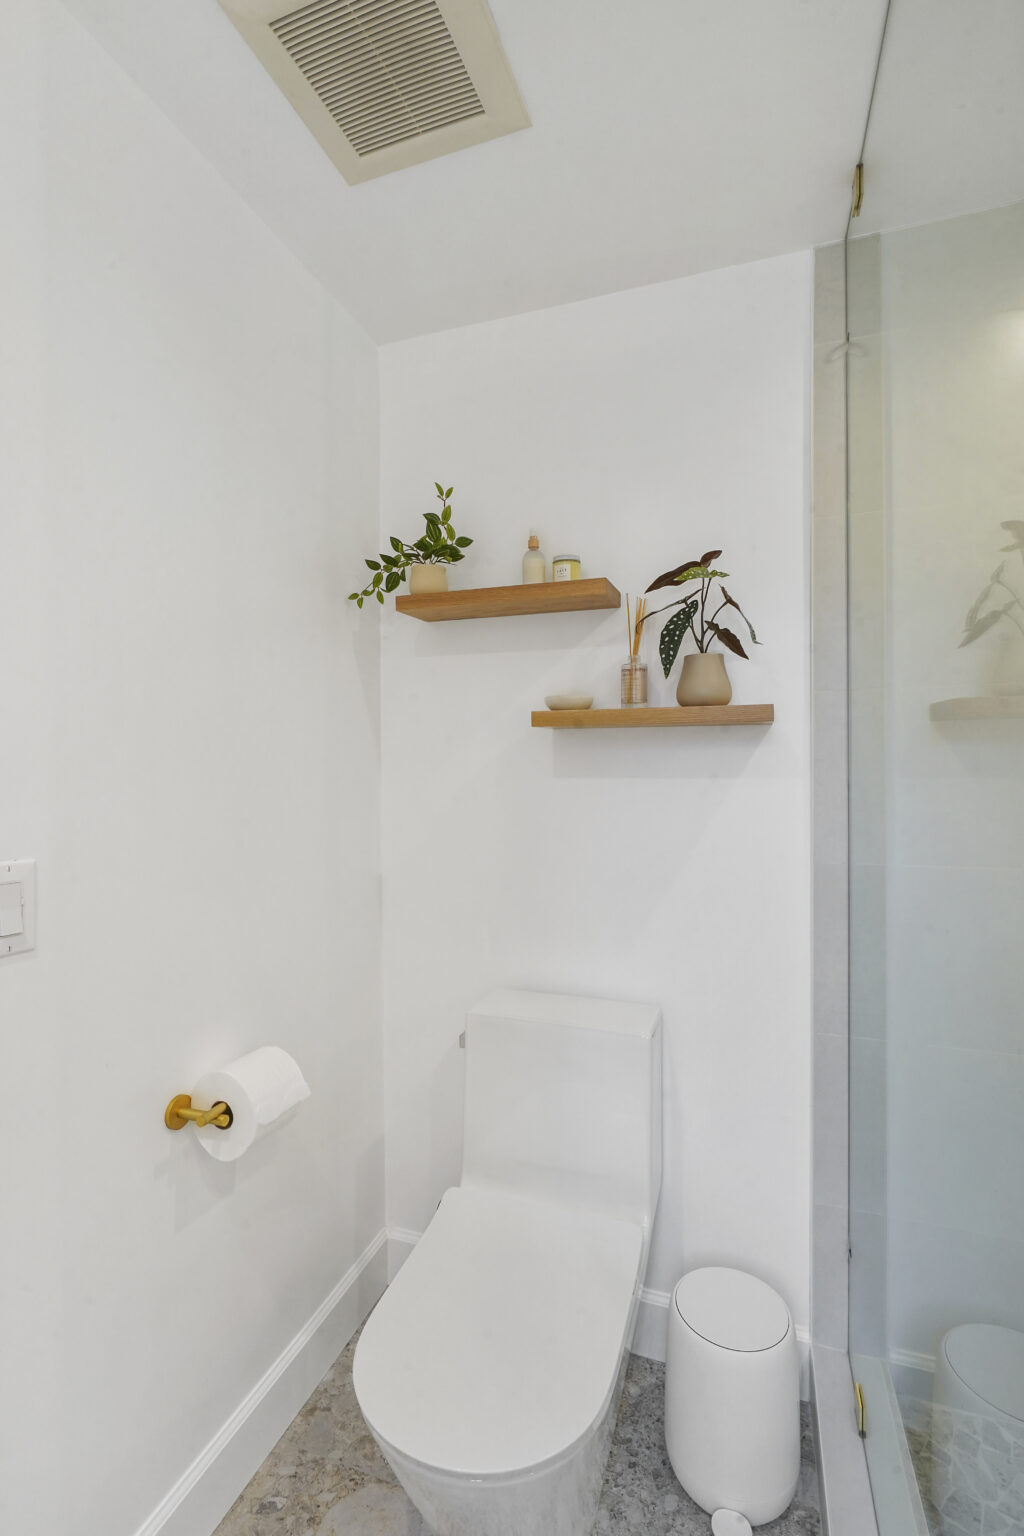 Bathroom remodel in Seal Beach, CA by local general contractor Katz Design & Builders - After